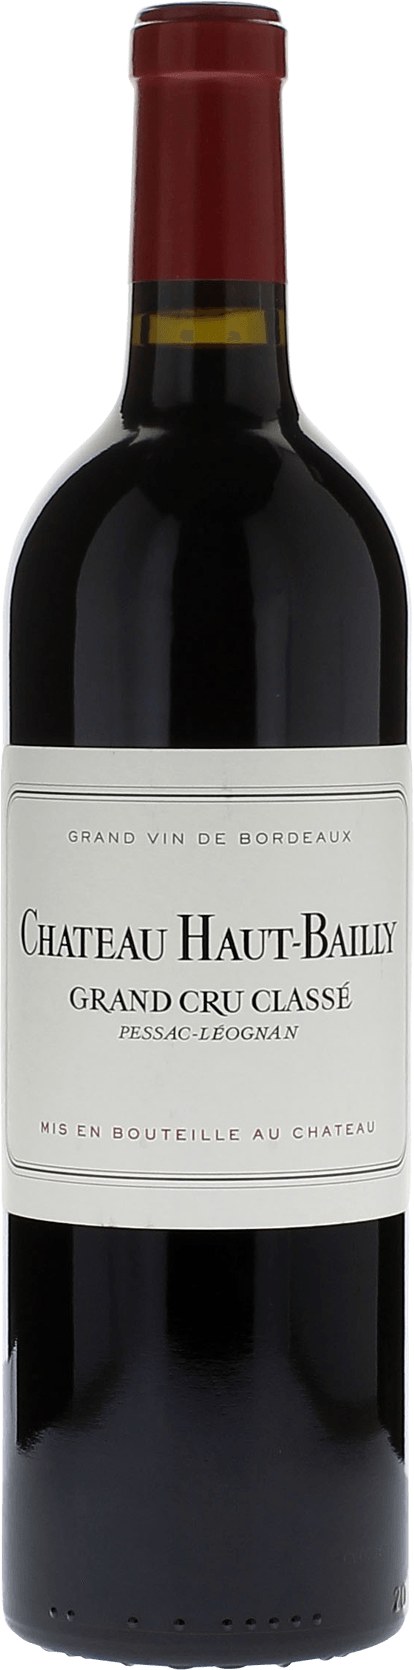 Haut bailly 1964 cru class Pessac-Lognan, Bordeaux rouge